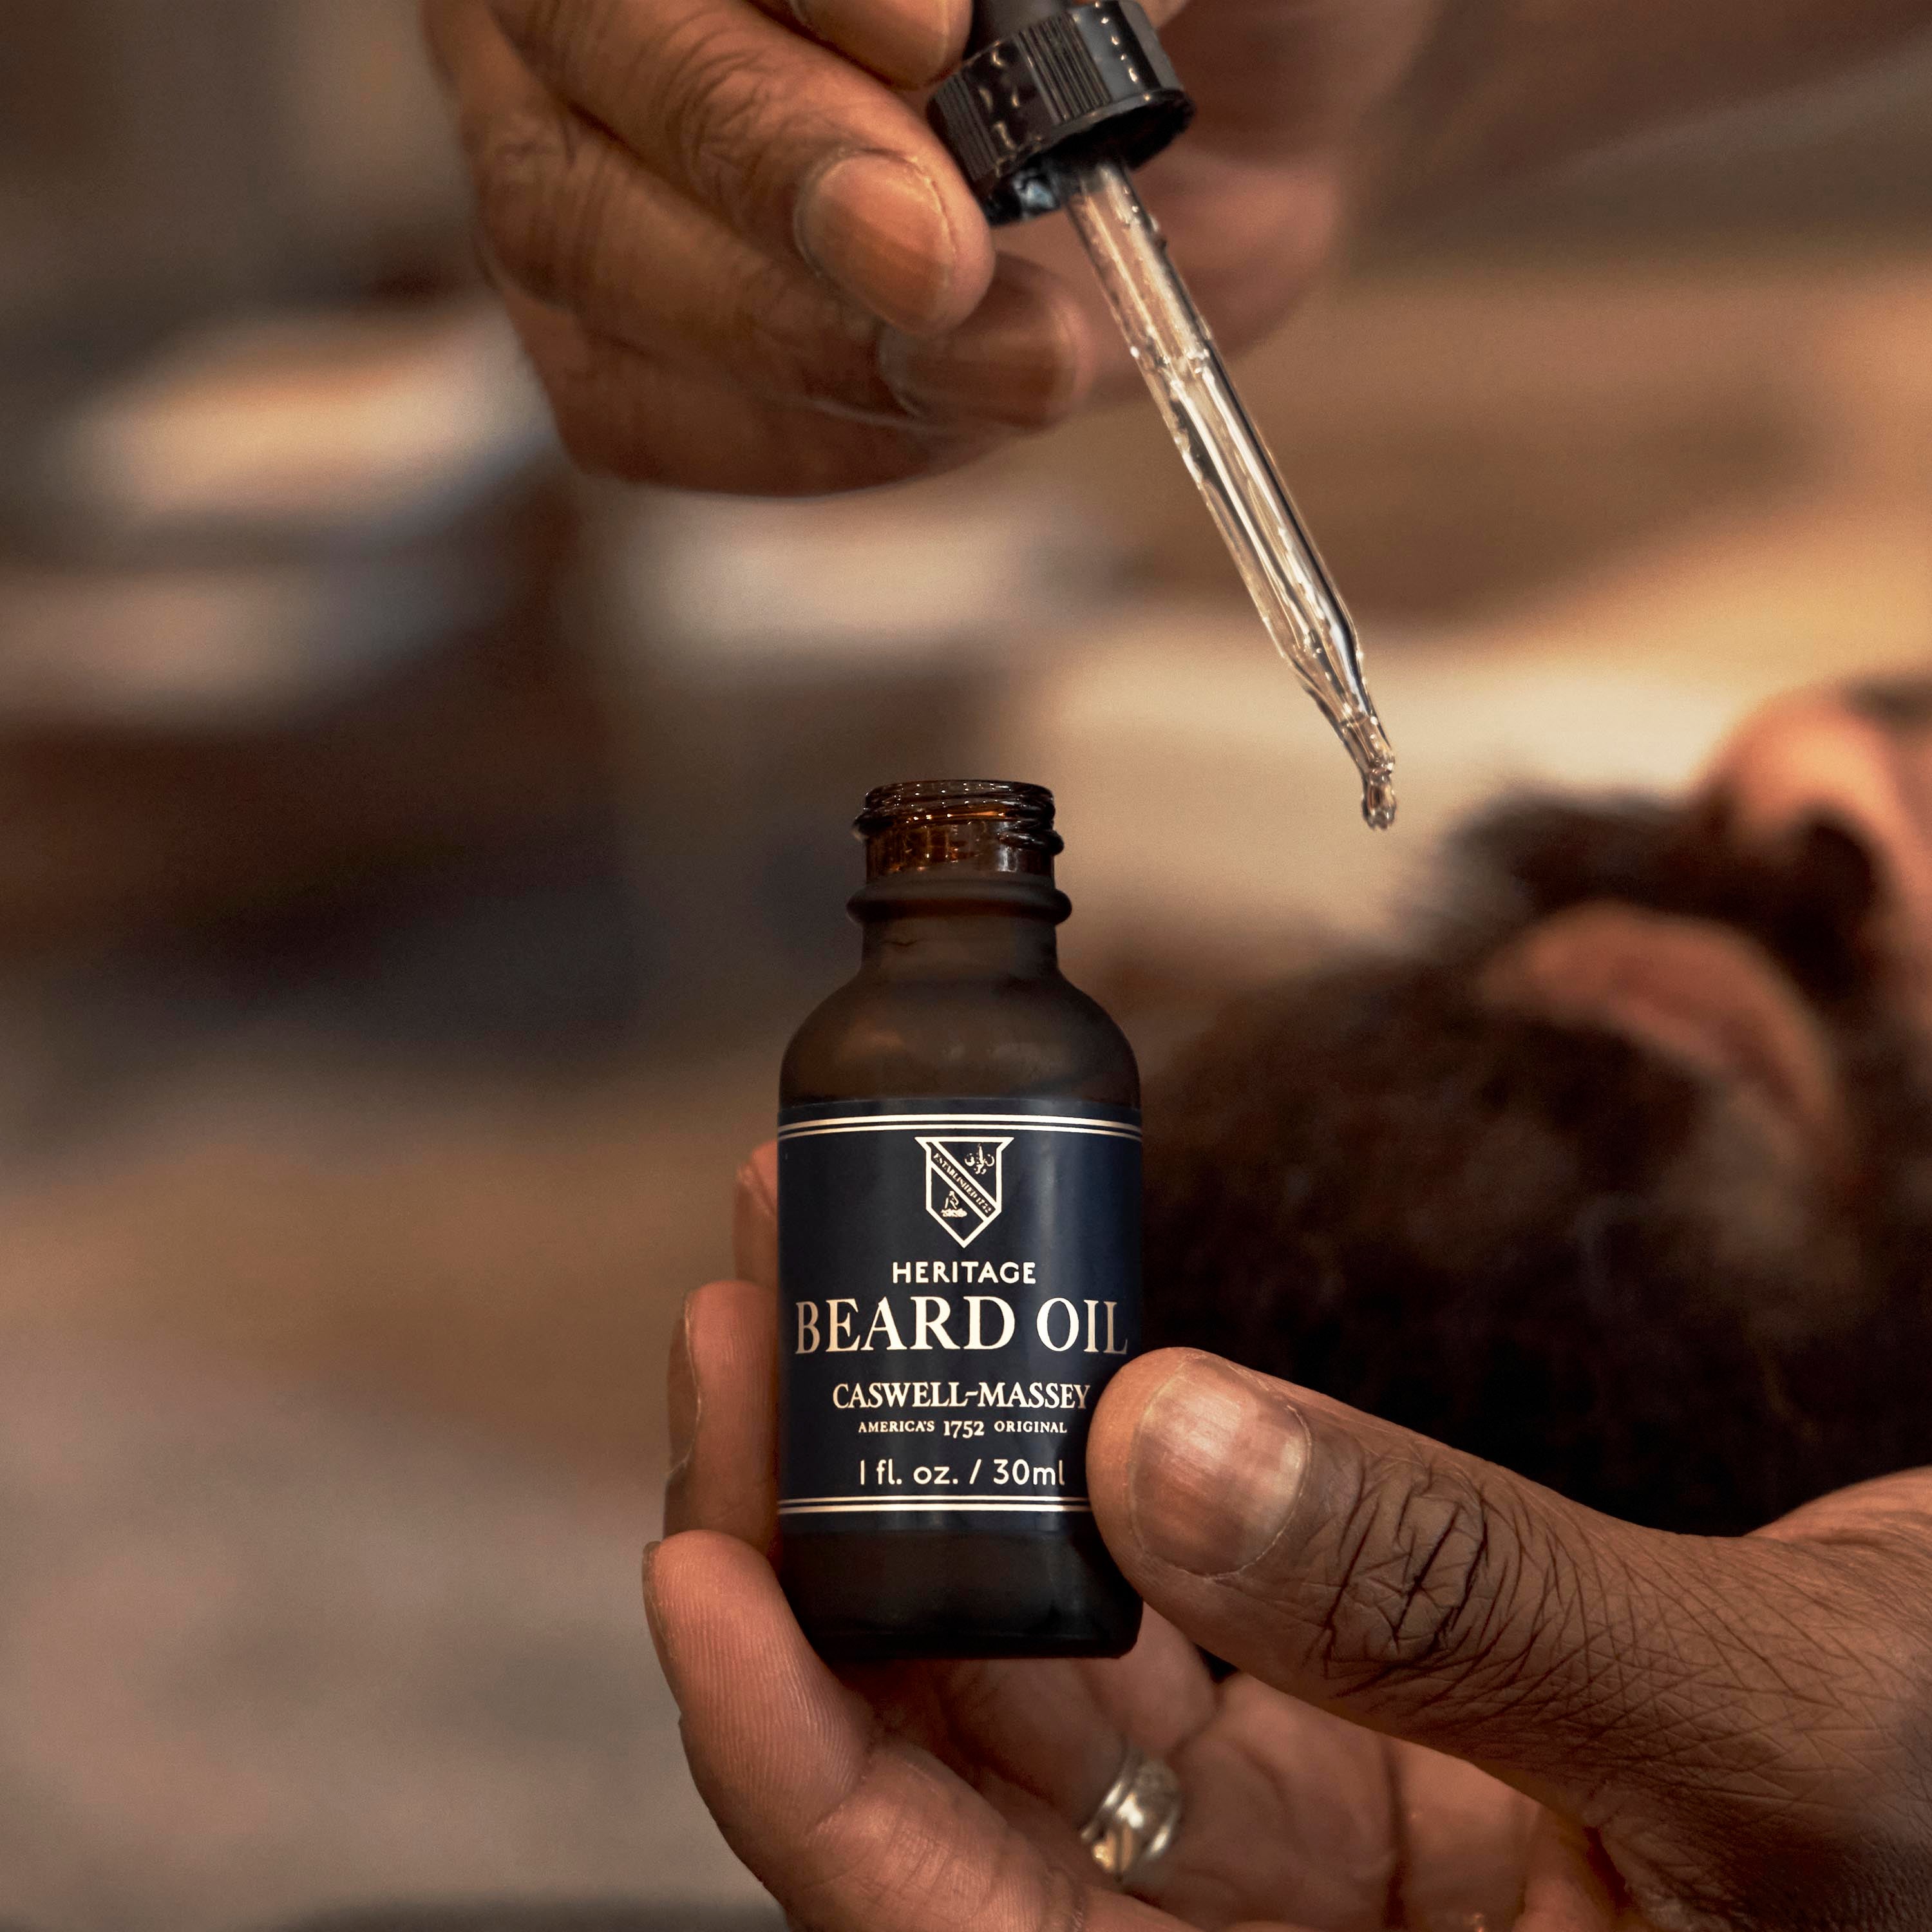 Caswell-Massey Face & Beard Oil - image showing barber applying to man's beard